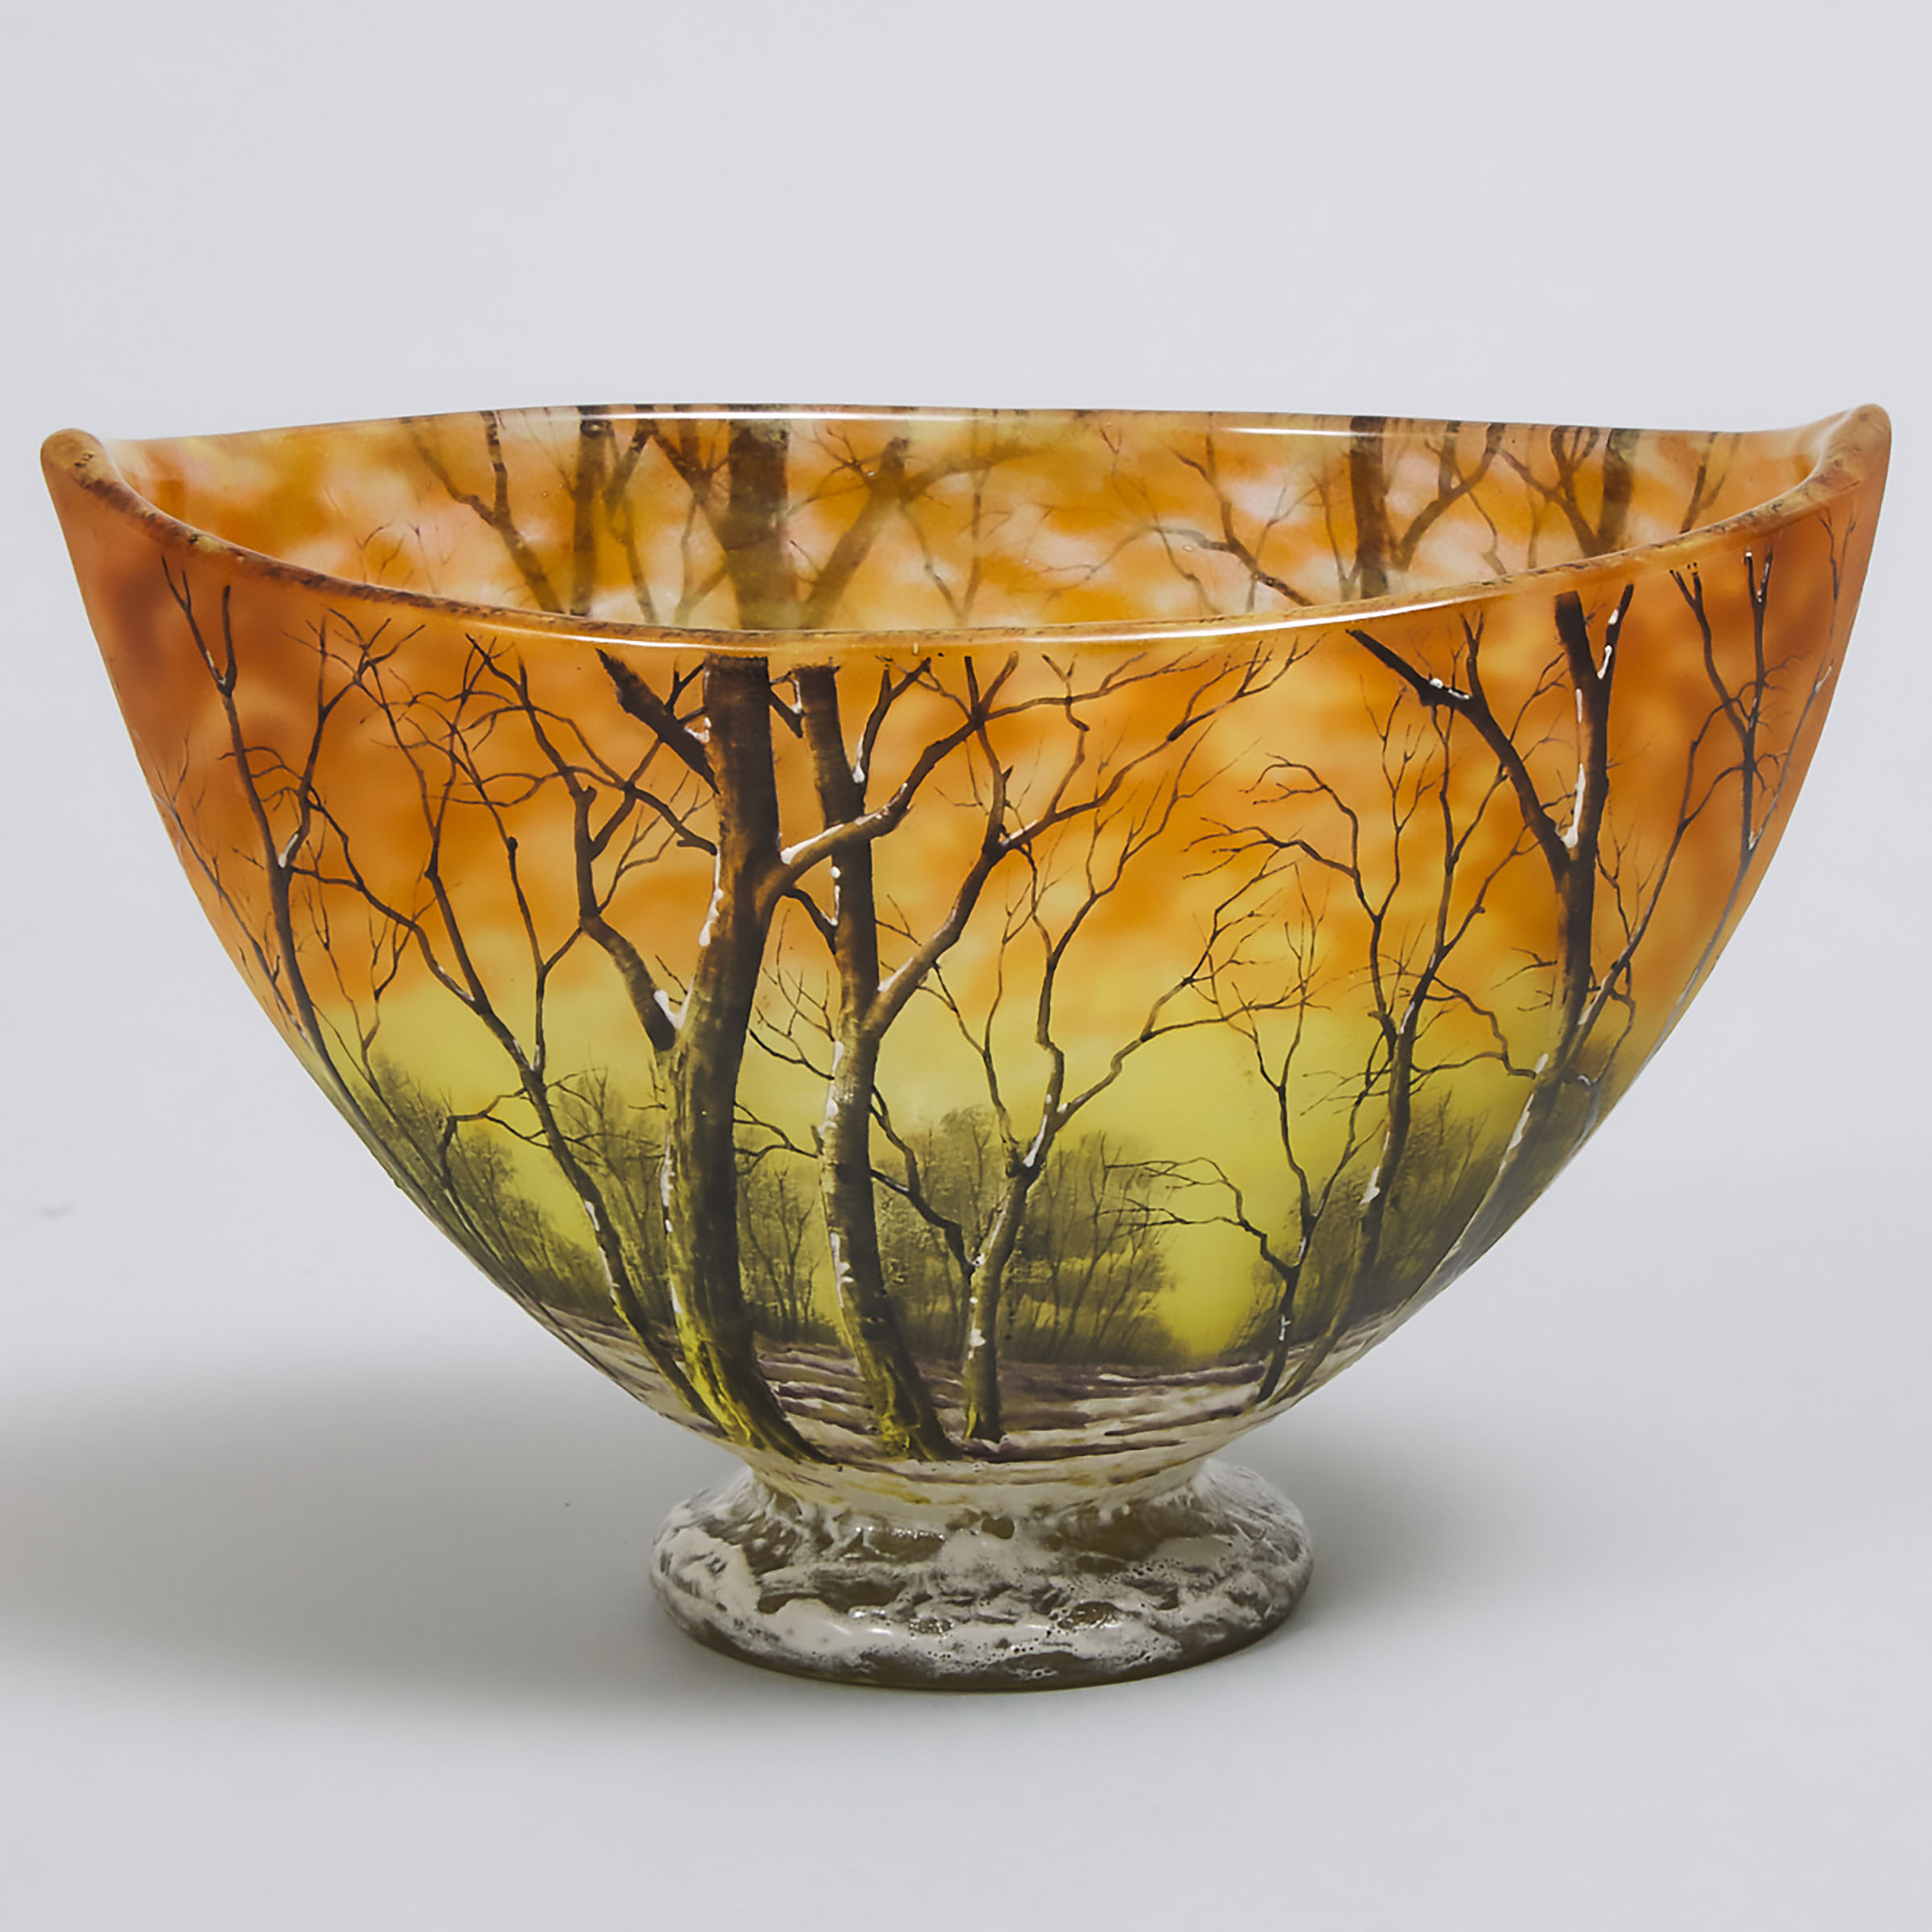 Daum 'Winter' Enameled Cameo Glass Vase, c.1900